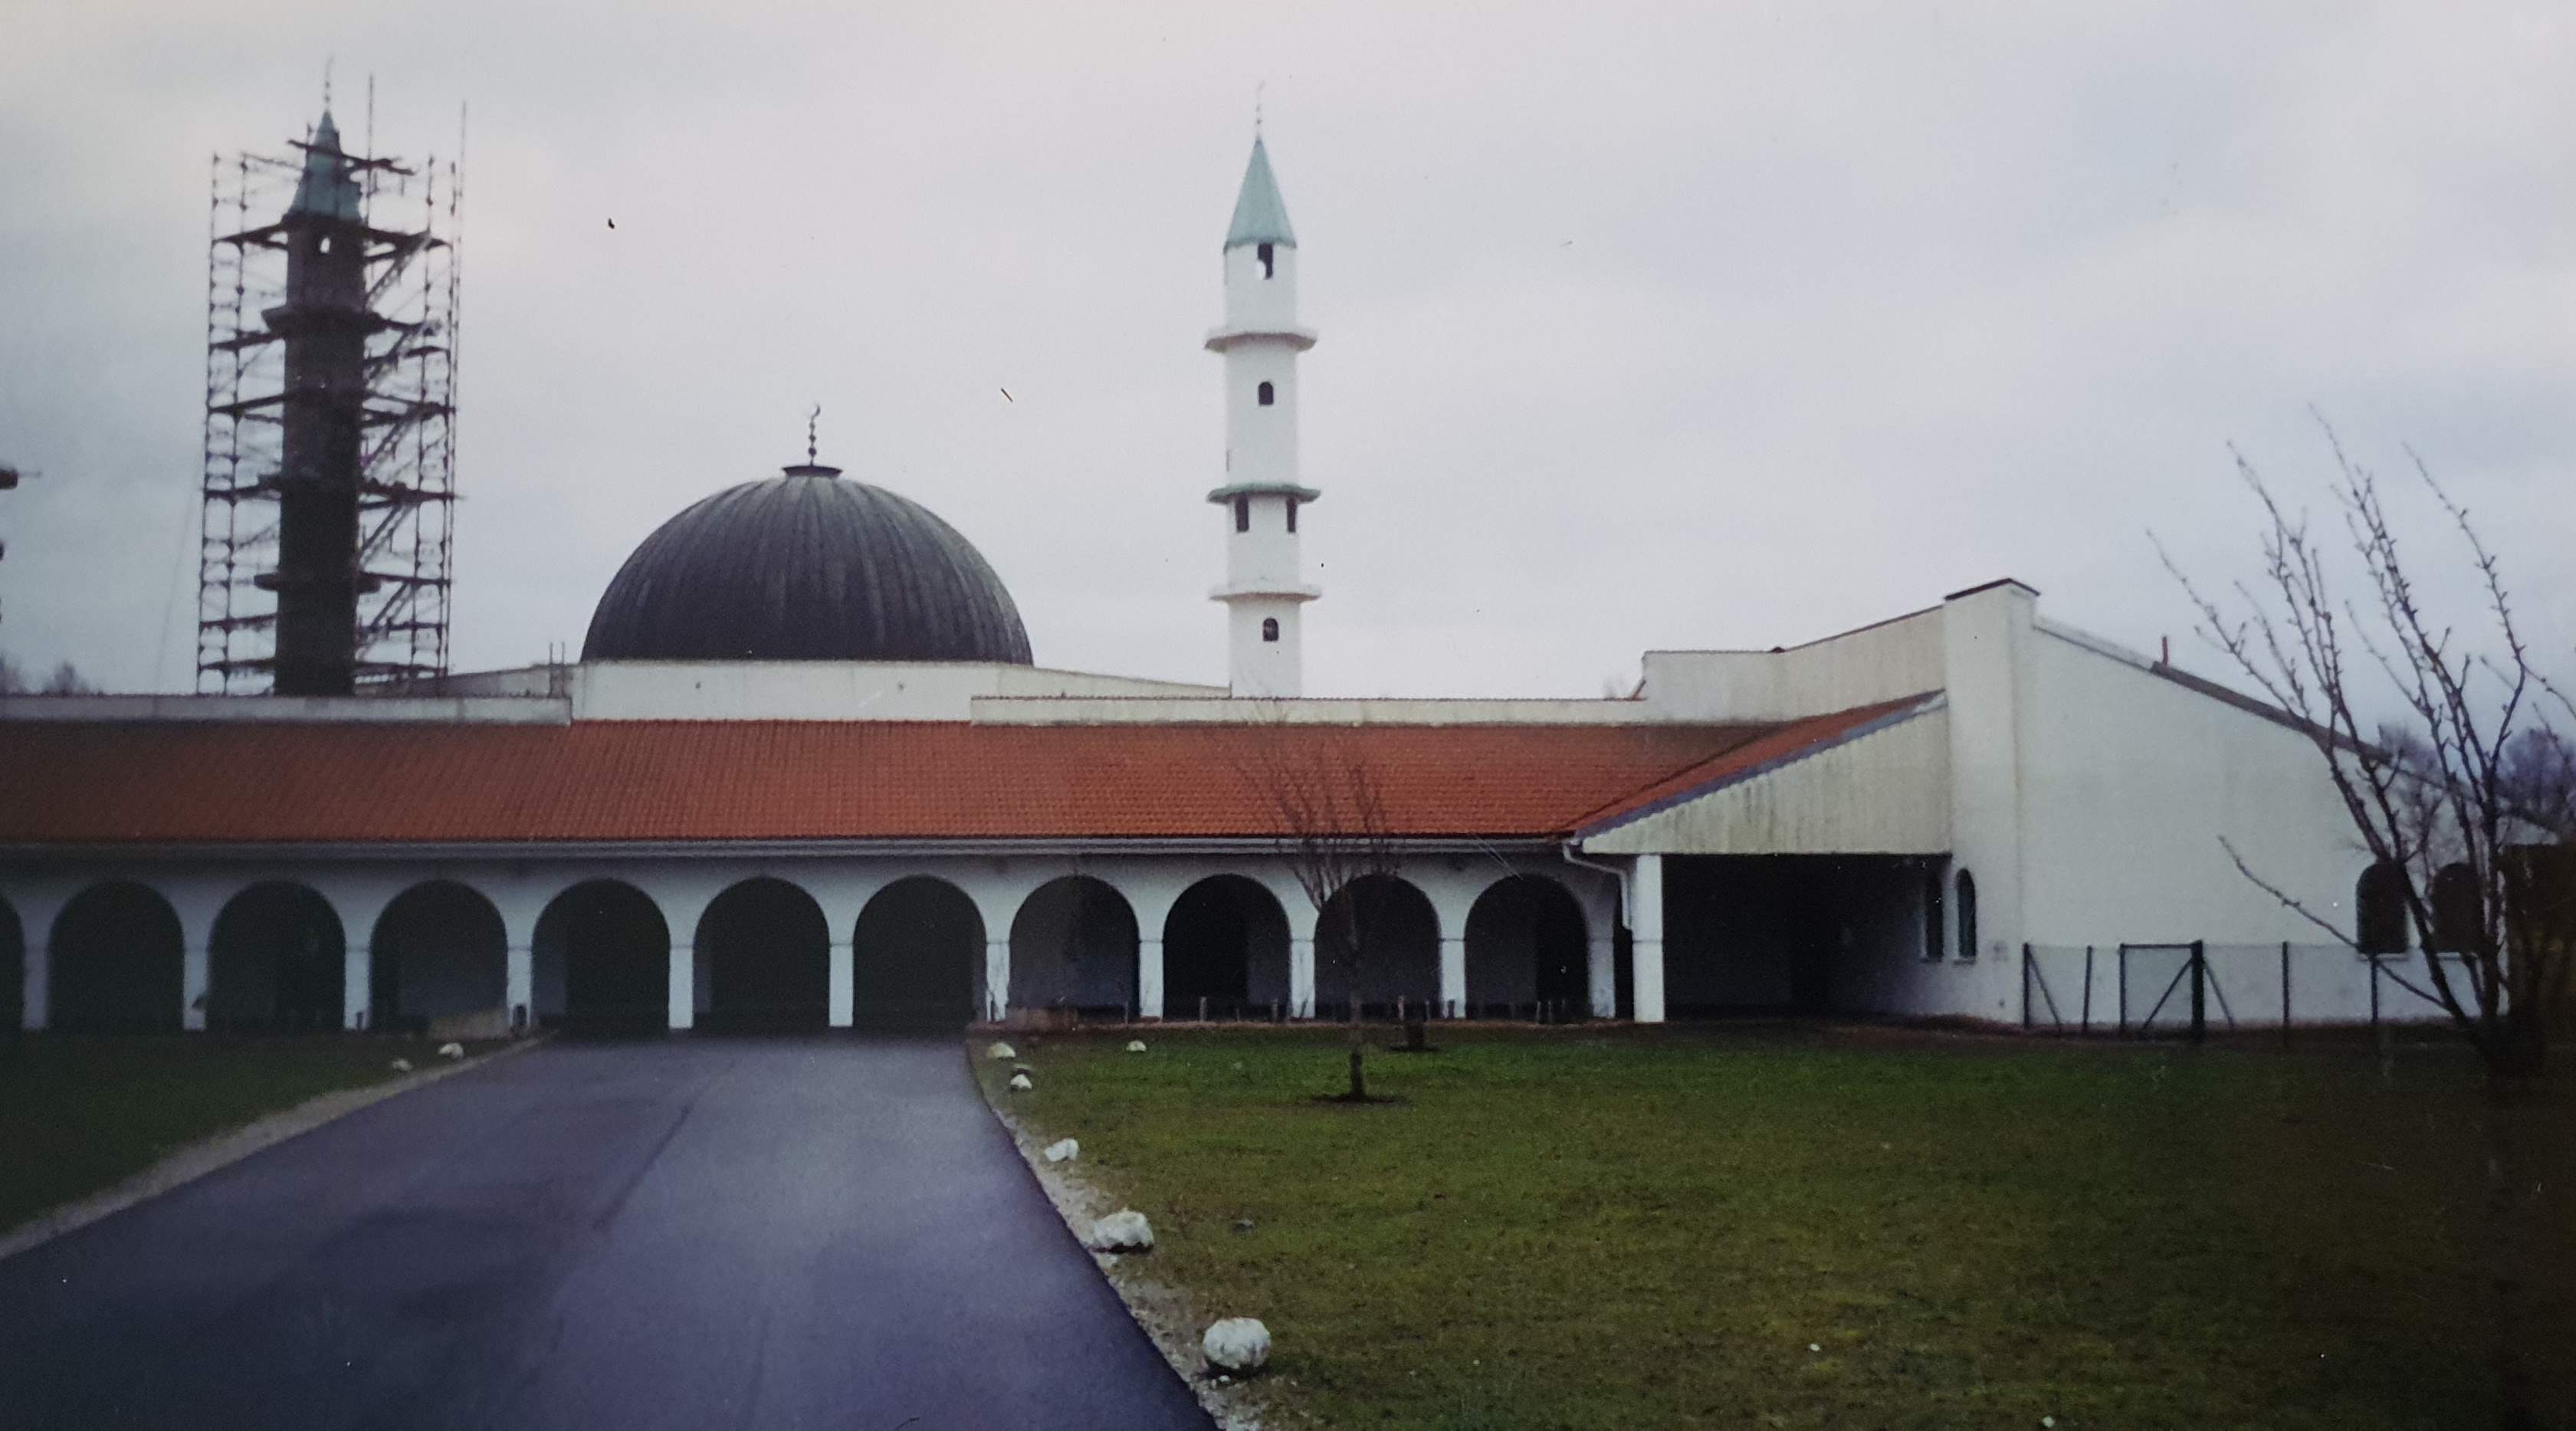 Moskébyggets, minareter 2001.